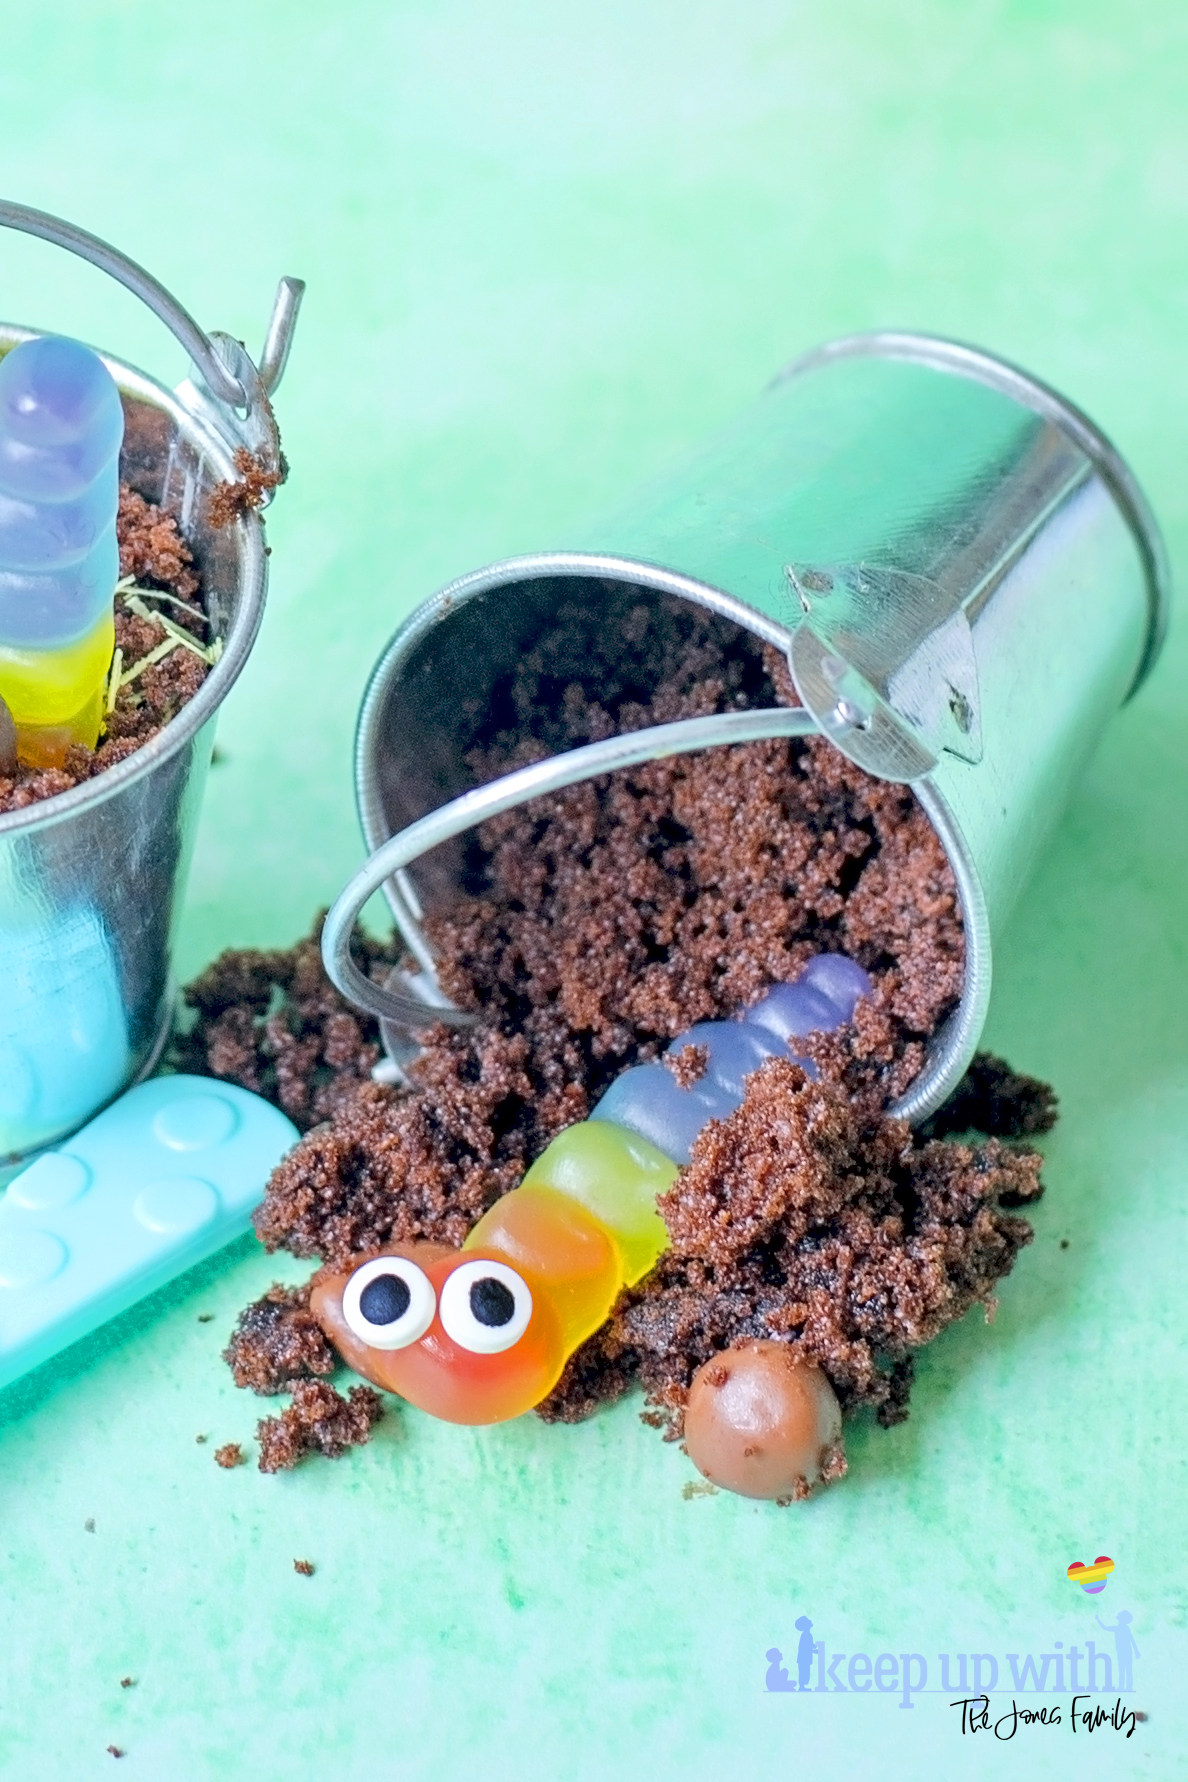 Bucket of Dirt ‘n’ Worms Desserts